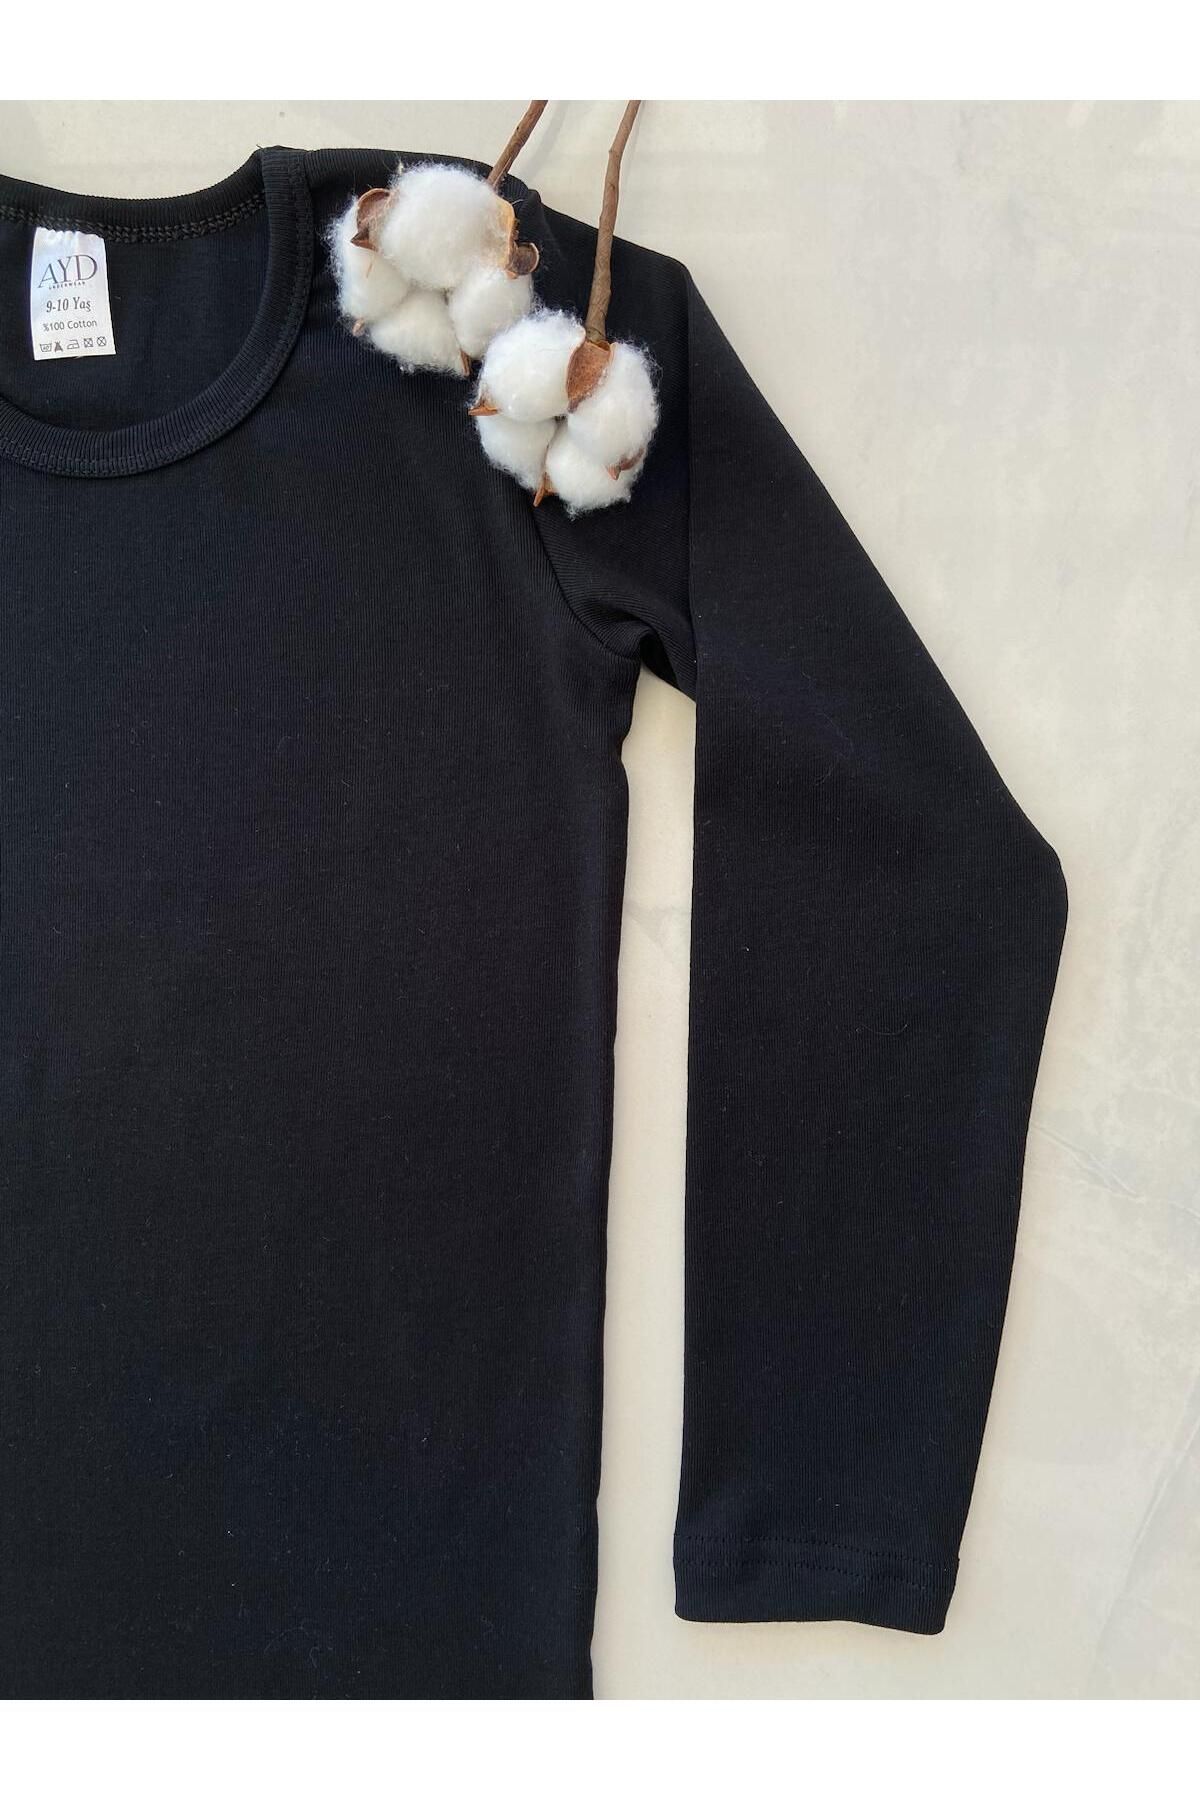 AYD UNDERWEAR Erkek / Kız %100 Pamuk Siyah Uzun Kollu Basic T-shirt